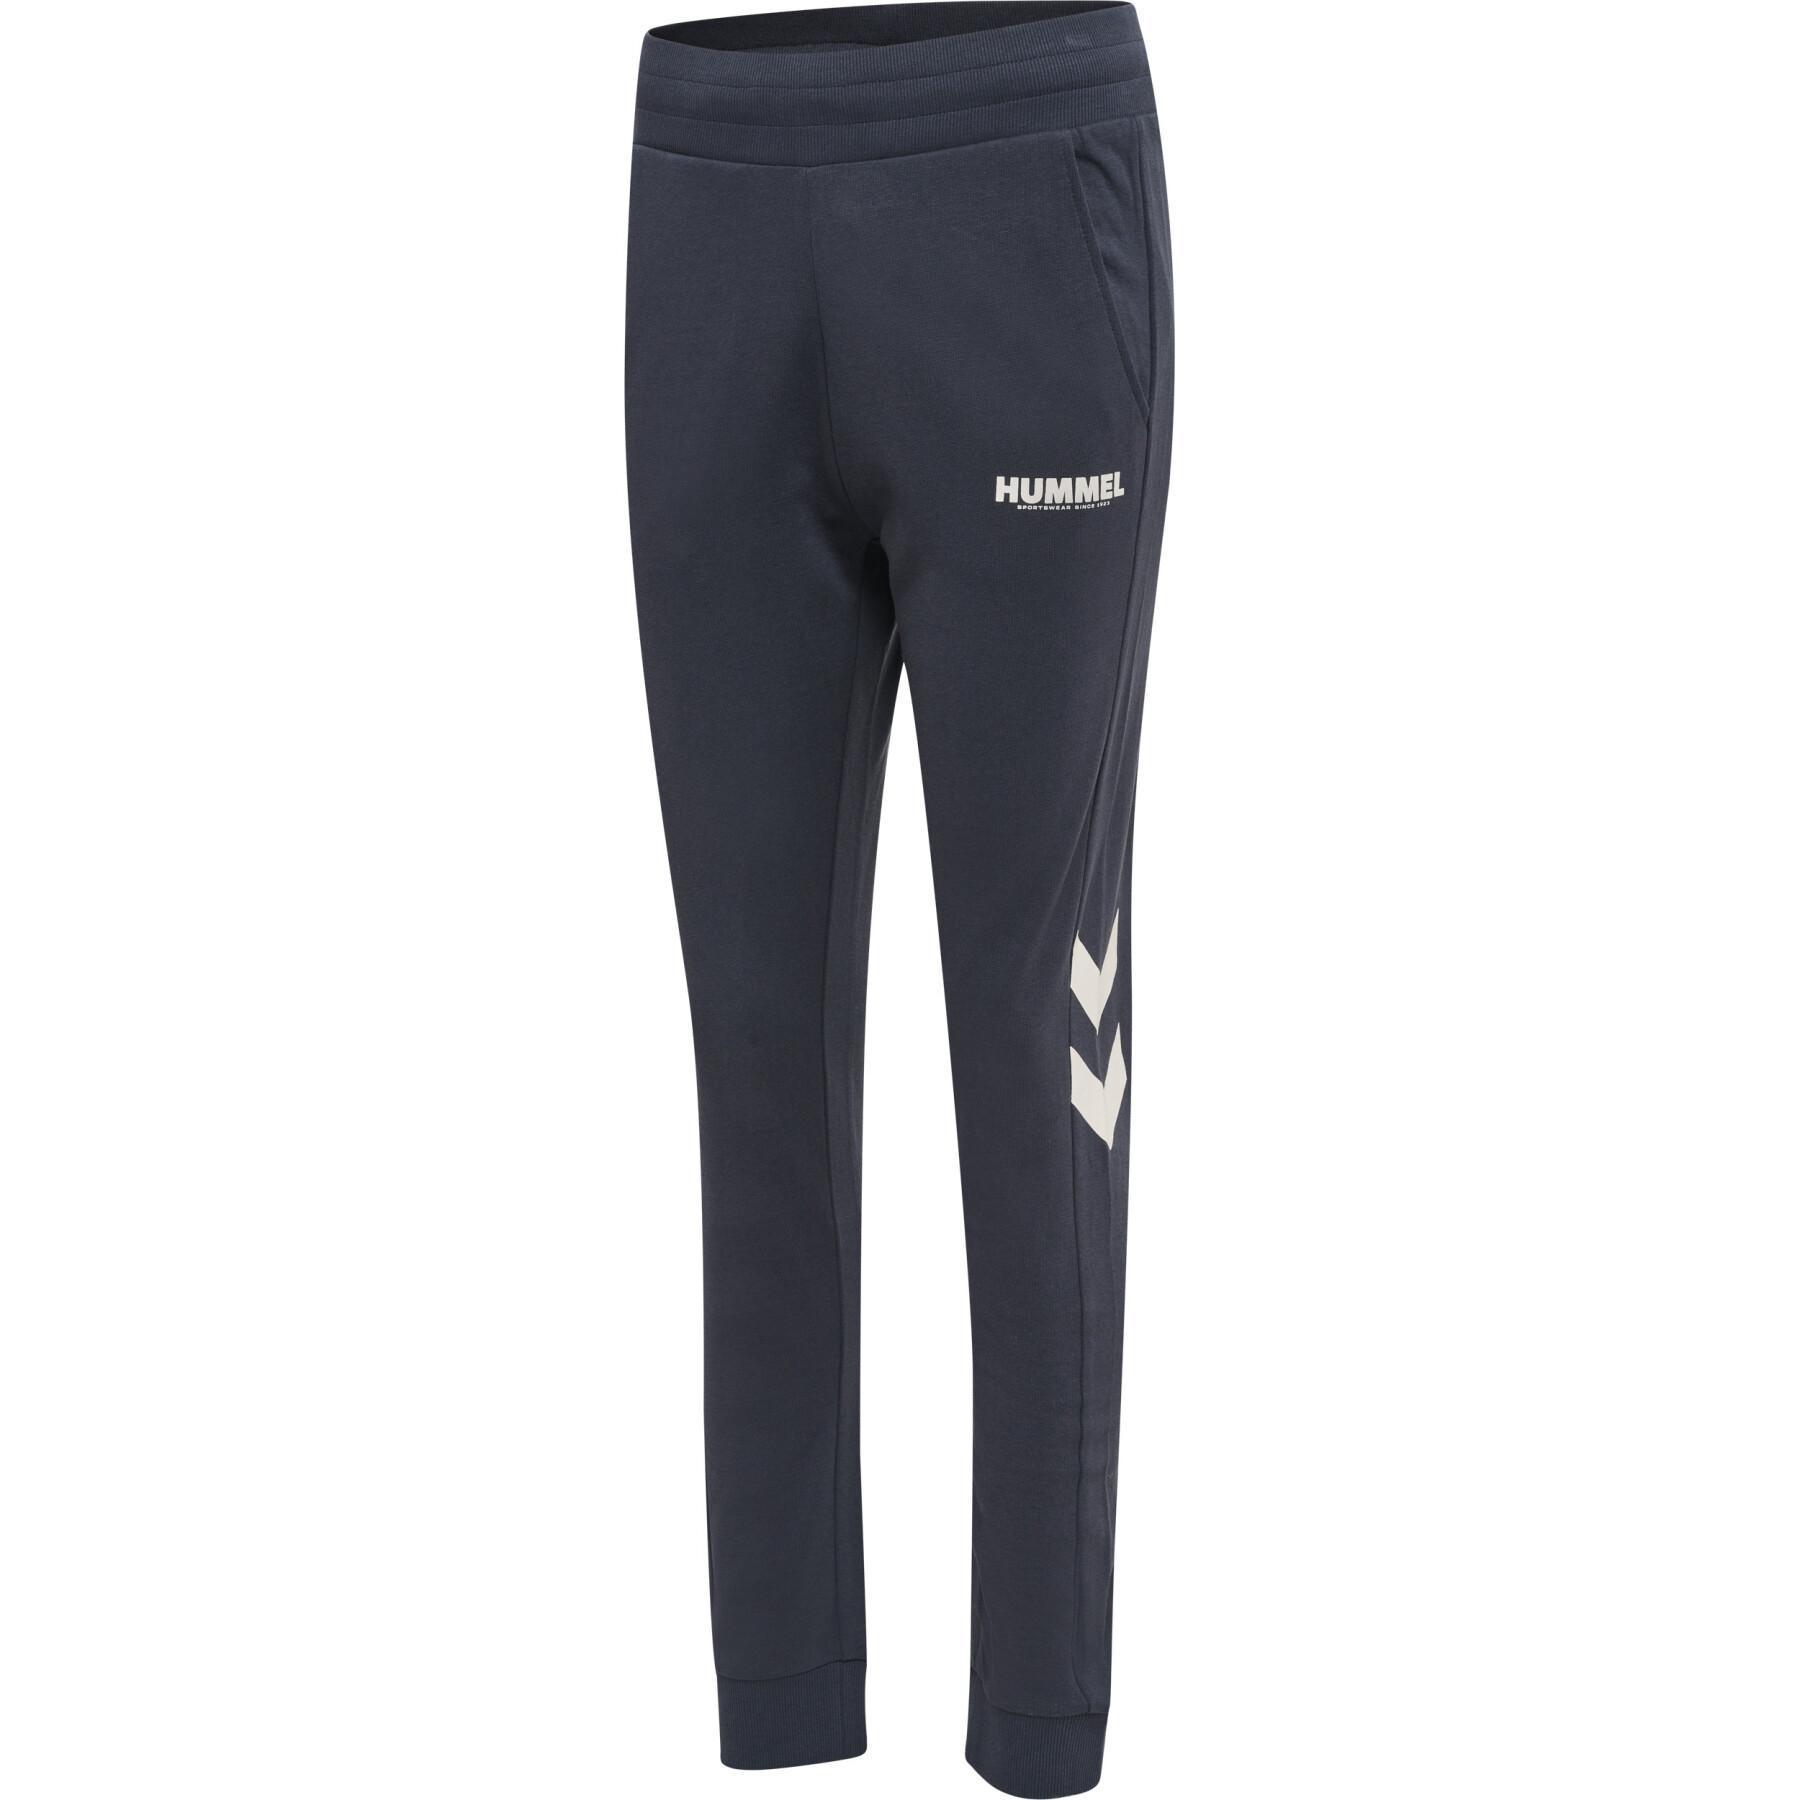 Women\'s tapered jogging suit Hummel Legacy - Hummel - Brands - Lifestyle